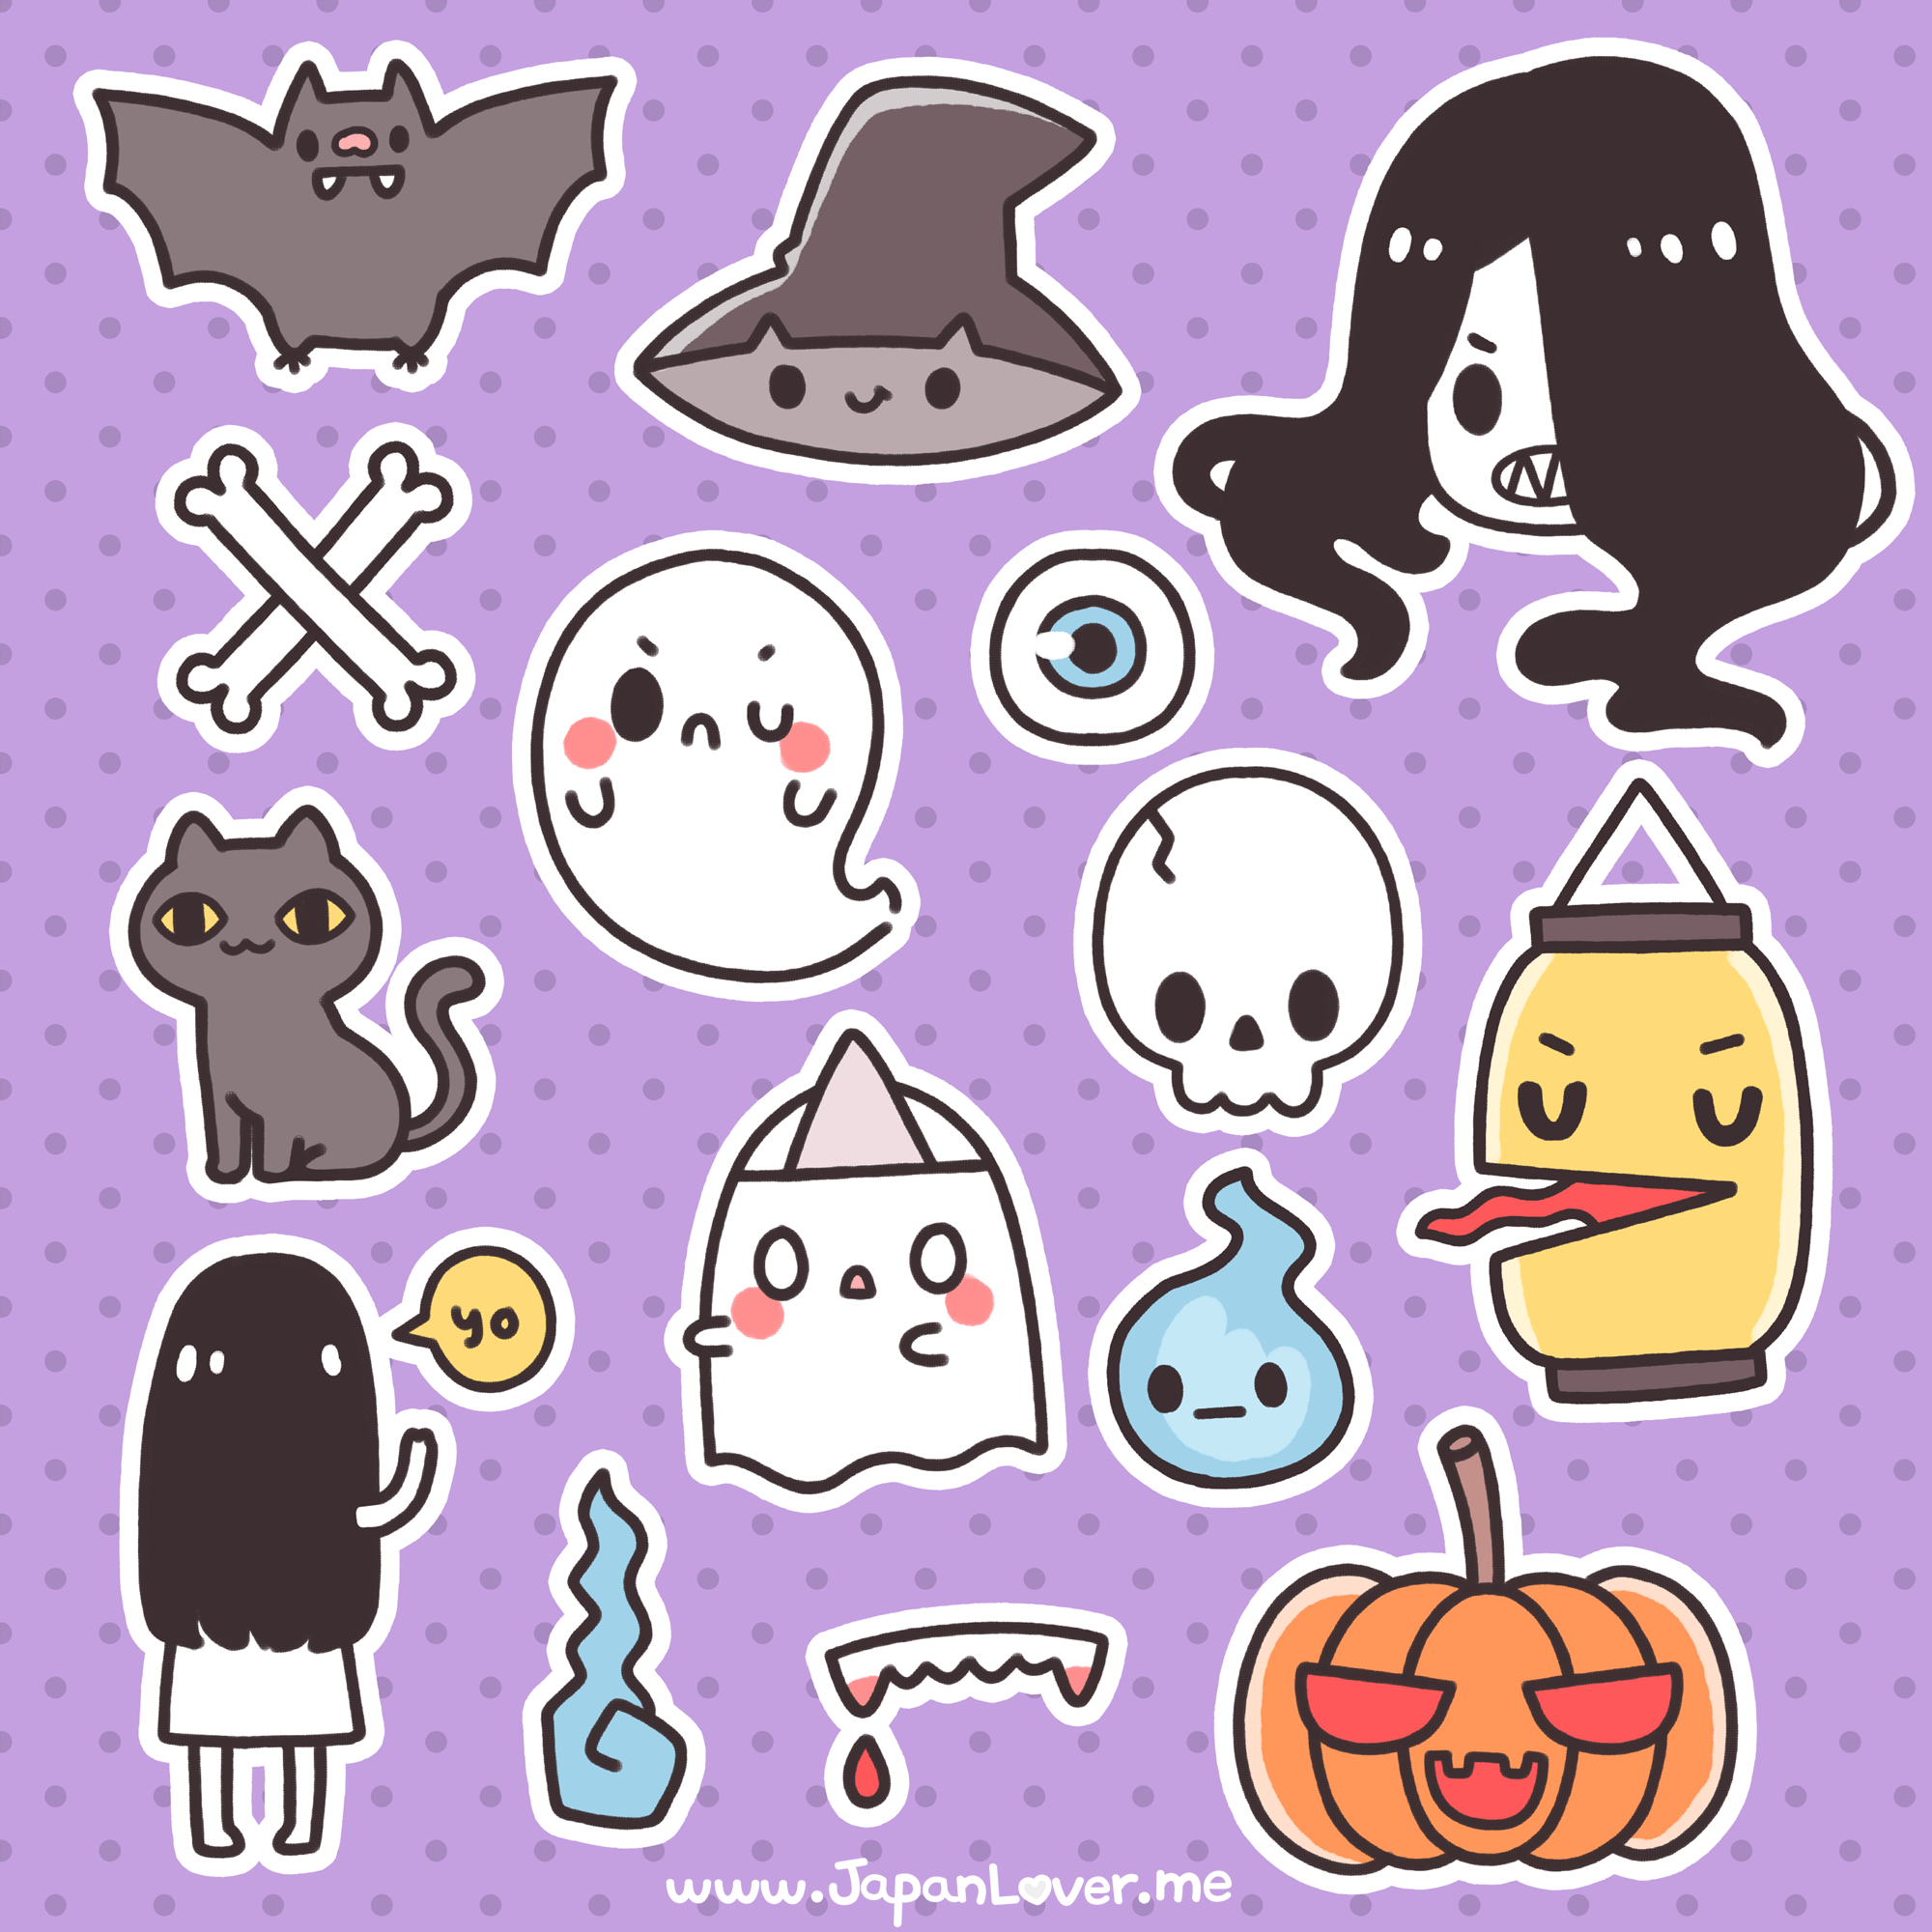 Printable Spooky Kawaii Stickers For Halloween! | Kawaii Japan Lover Me - Free Printable Kawaii Stickers